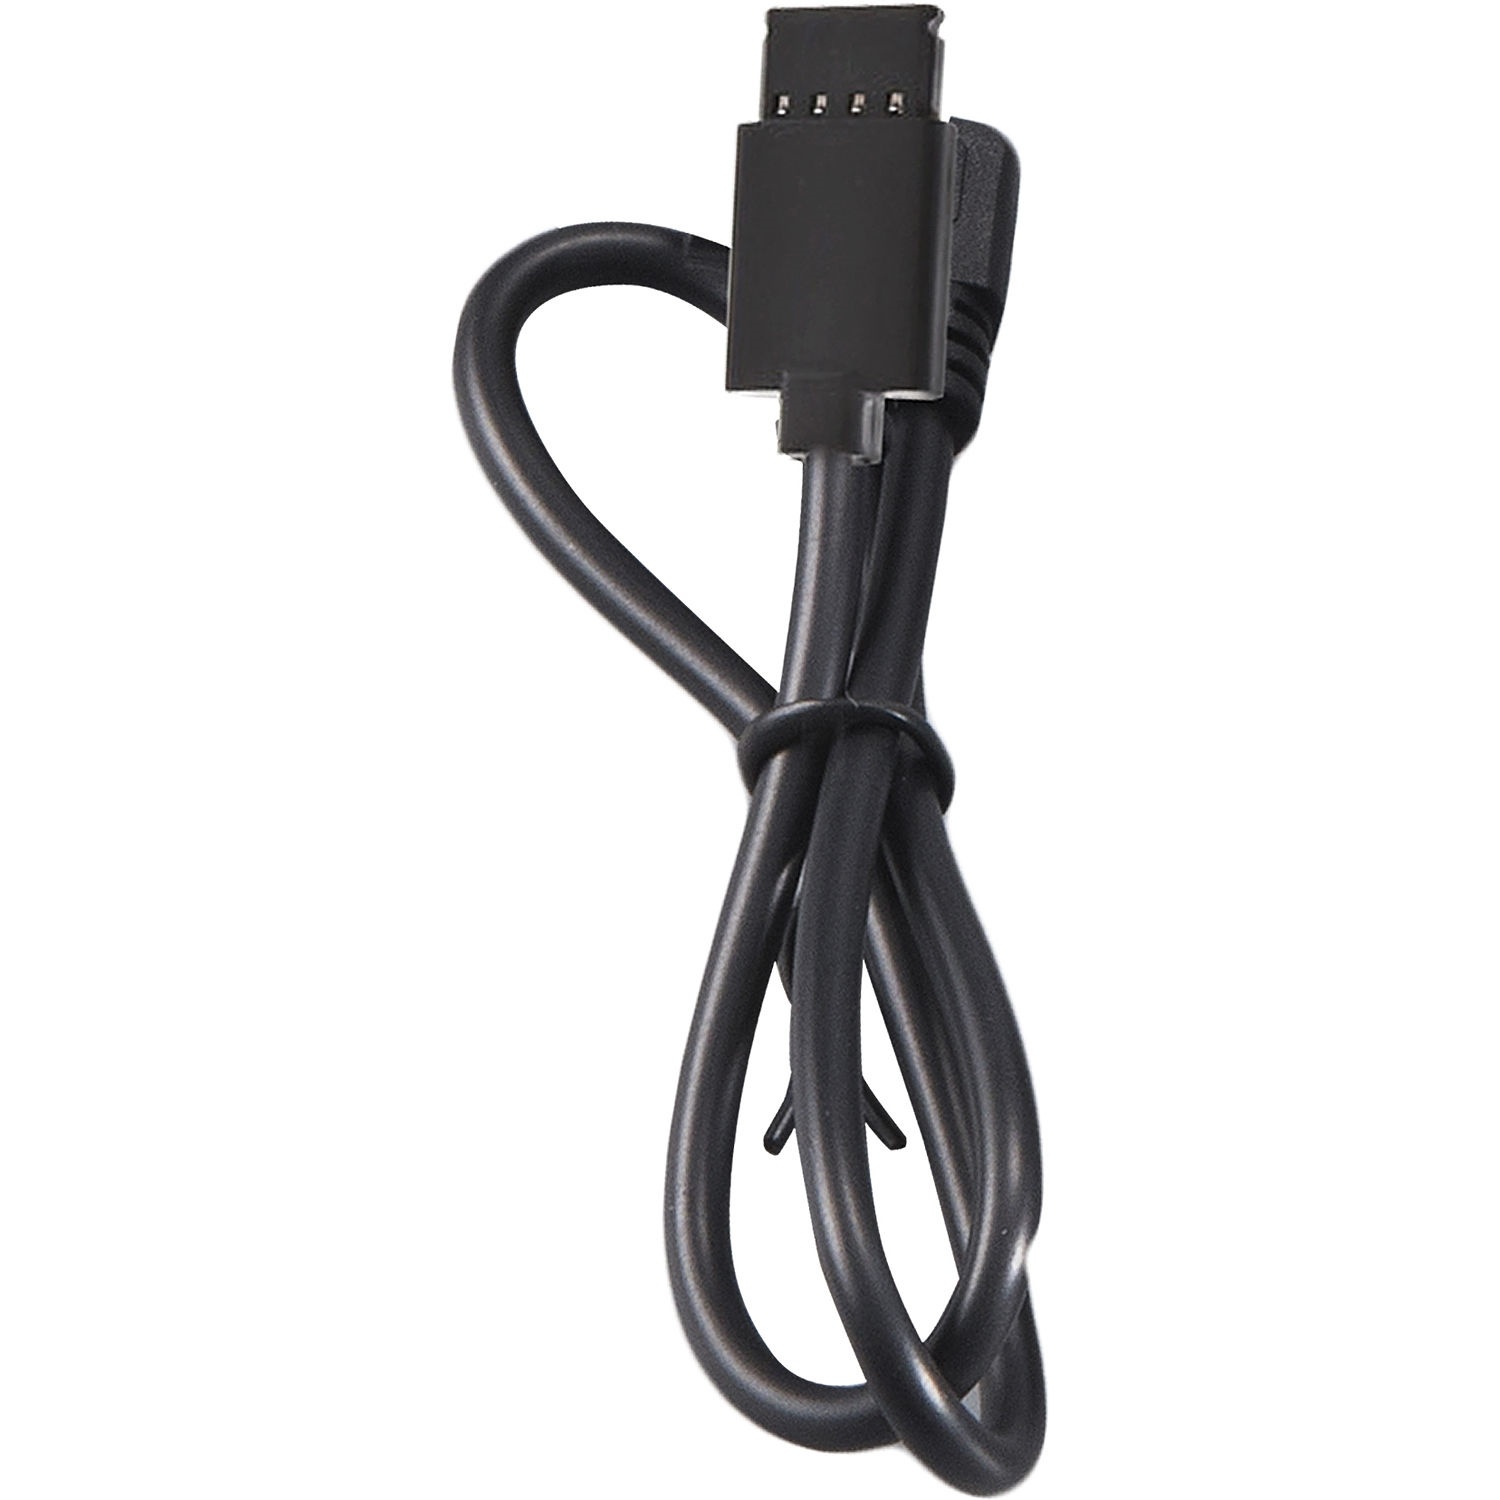 Tilta Nucleus-Nano 12V Ronin-S To 5V Micro-USB Motor Power Cable